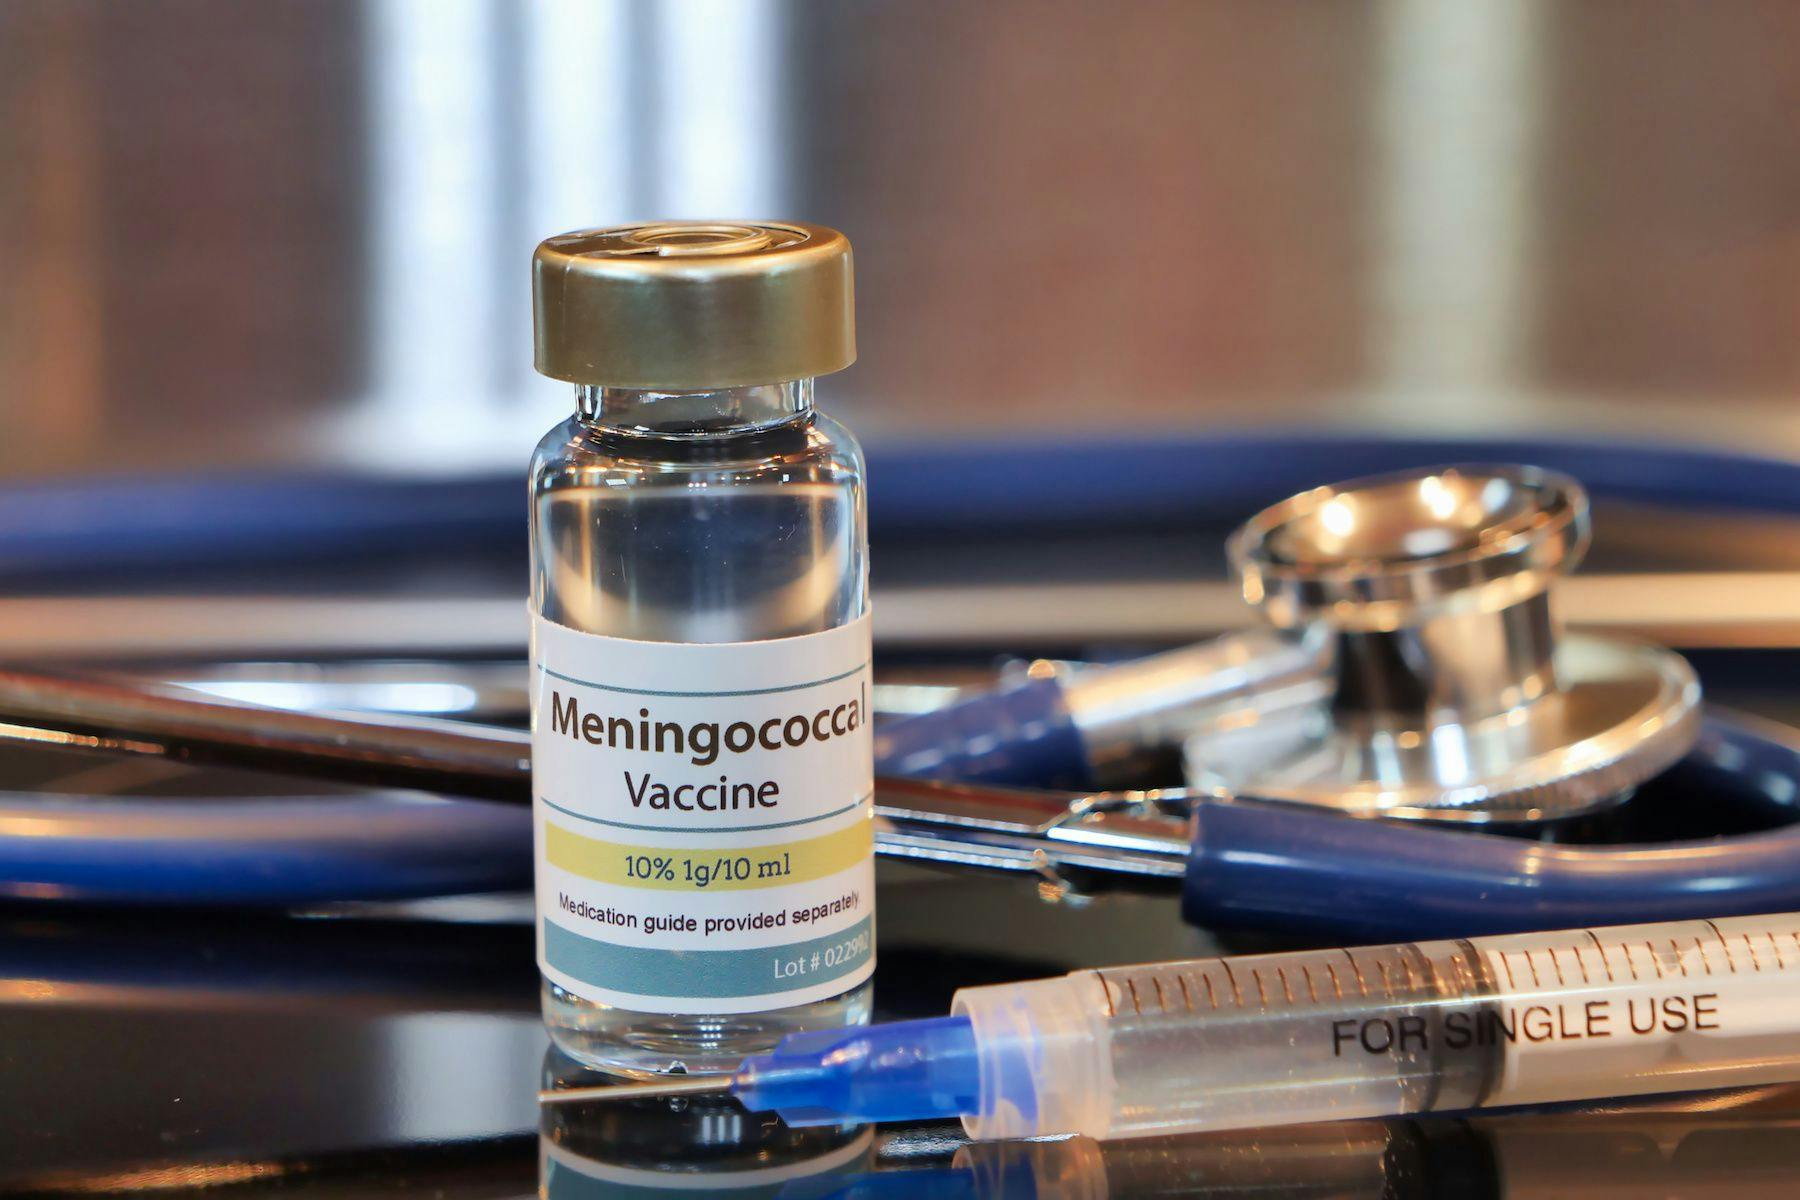 meningococcal vaccine vial